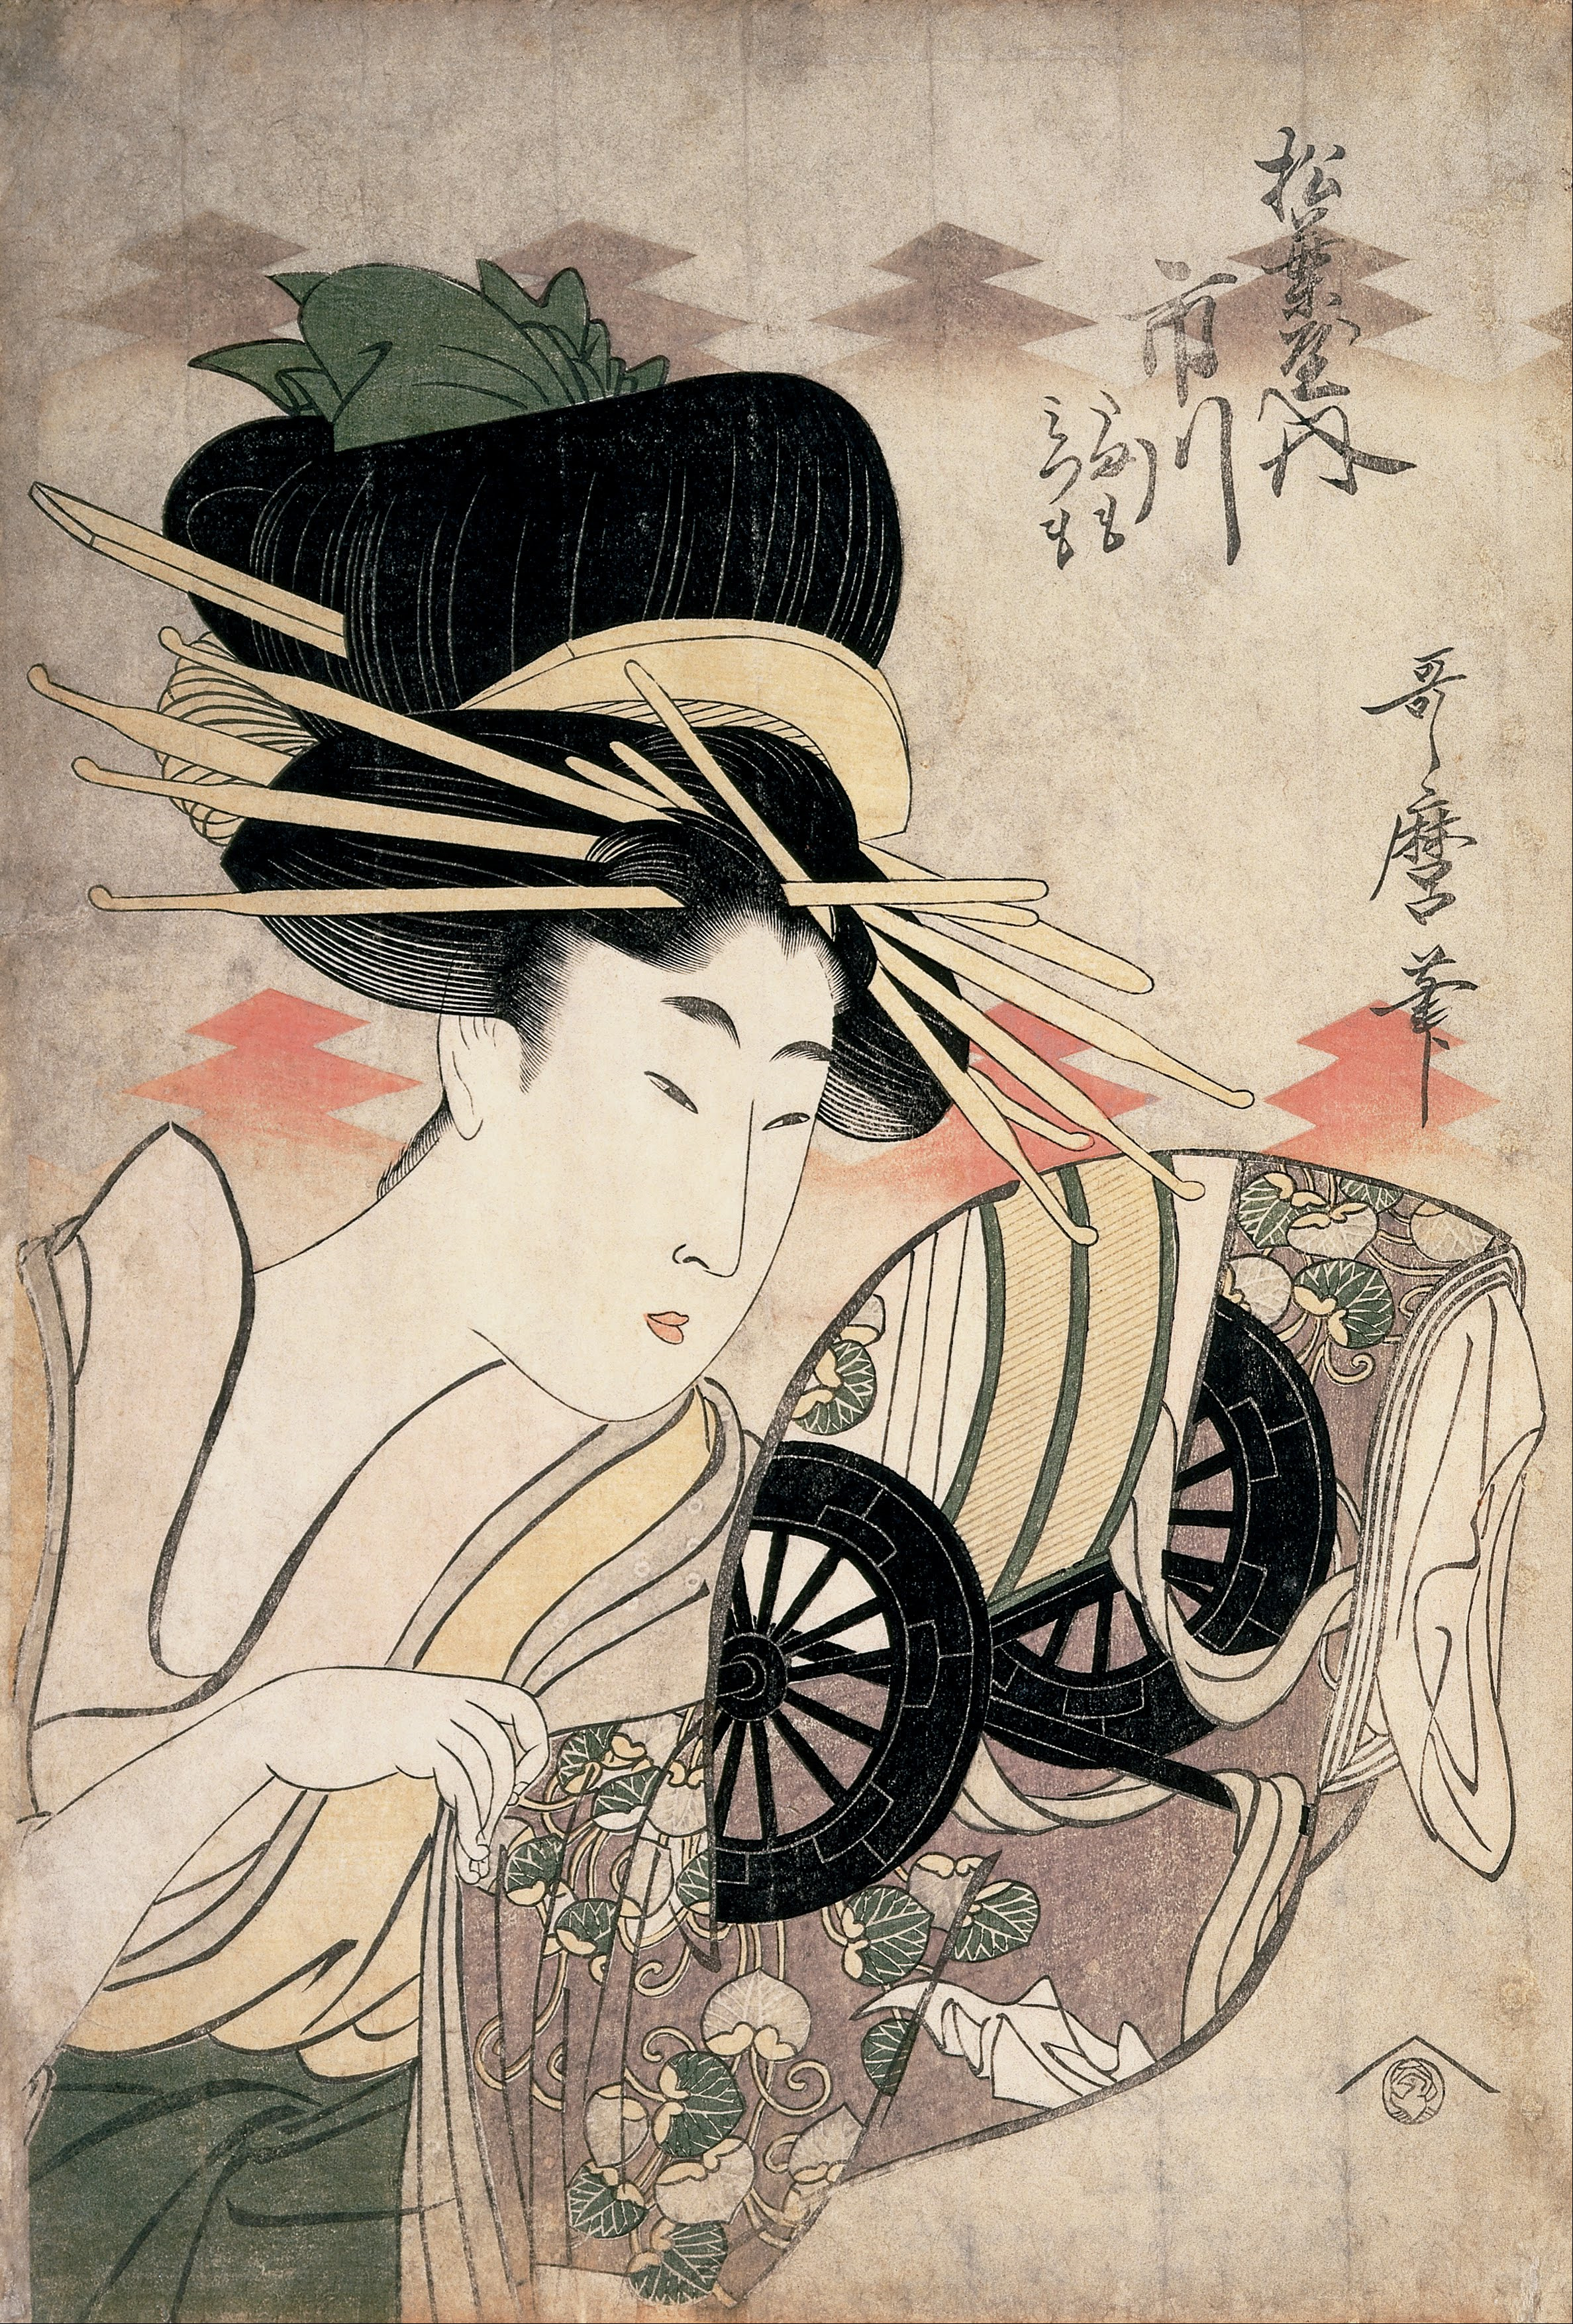 The Courtesan Ichikawa of the Matsuba Establishment by Kitagawa Utamaro - Late 1790s - 37.9 x 25.4 cm Cincinnati Art Museum